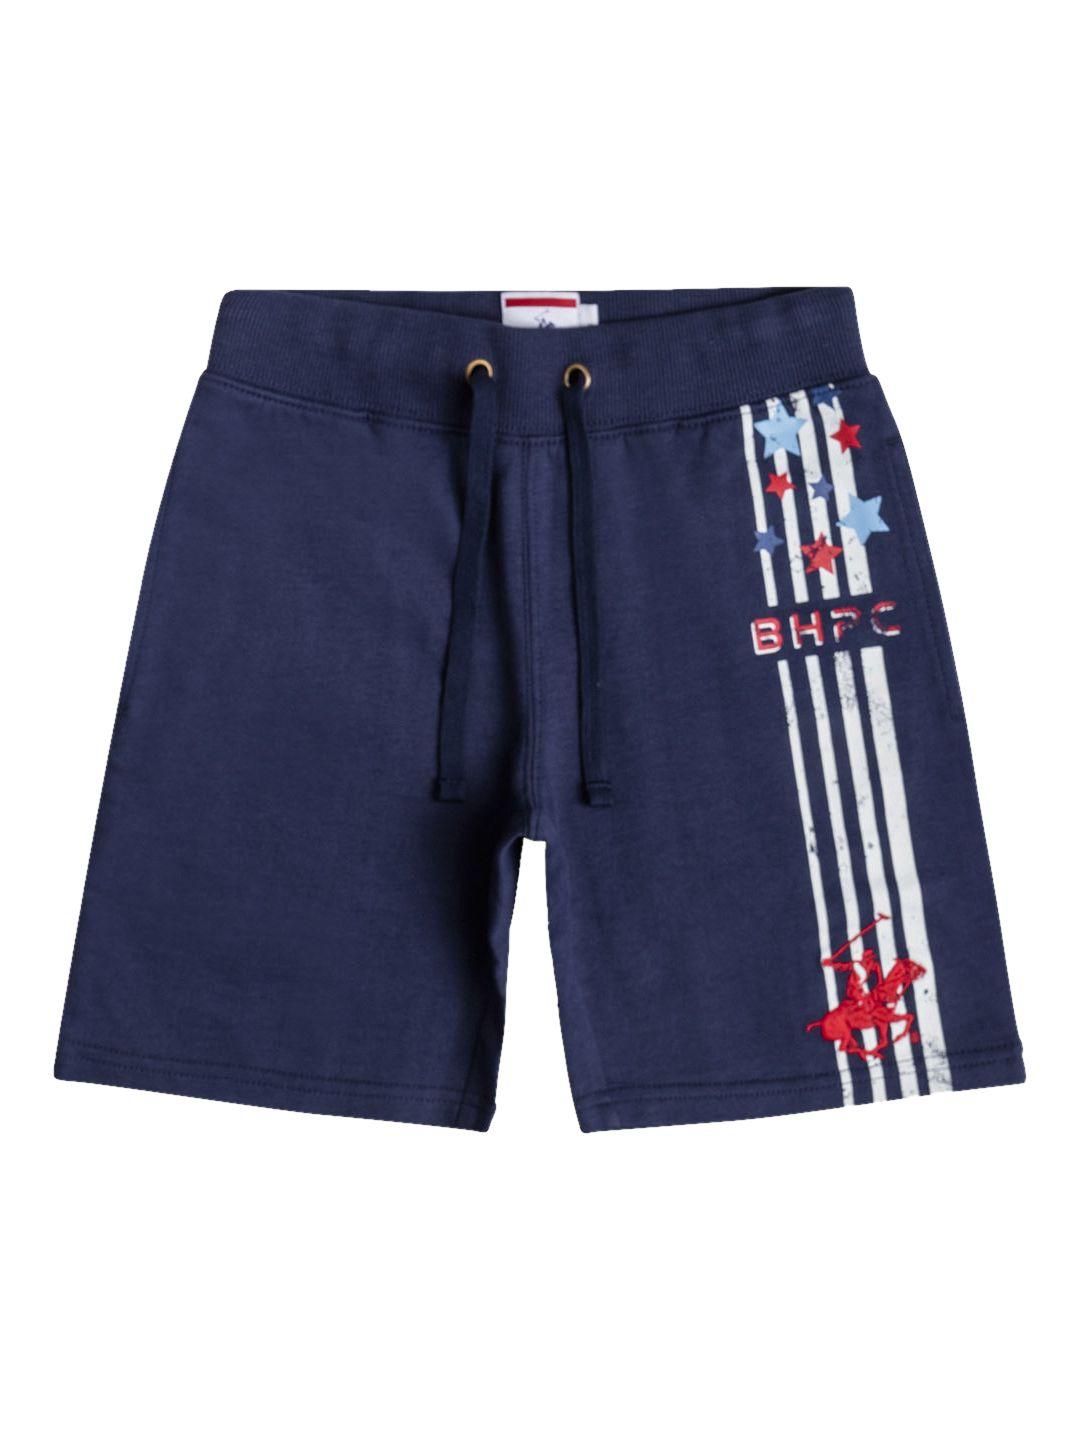 beverly hills polo club boys navy blue printed shorts